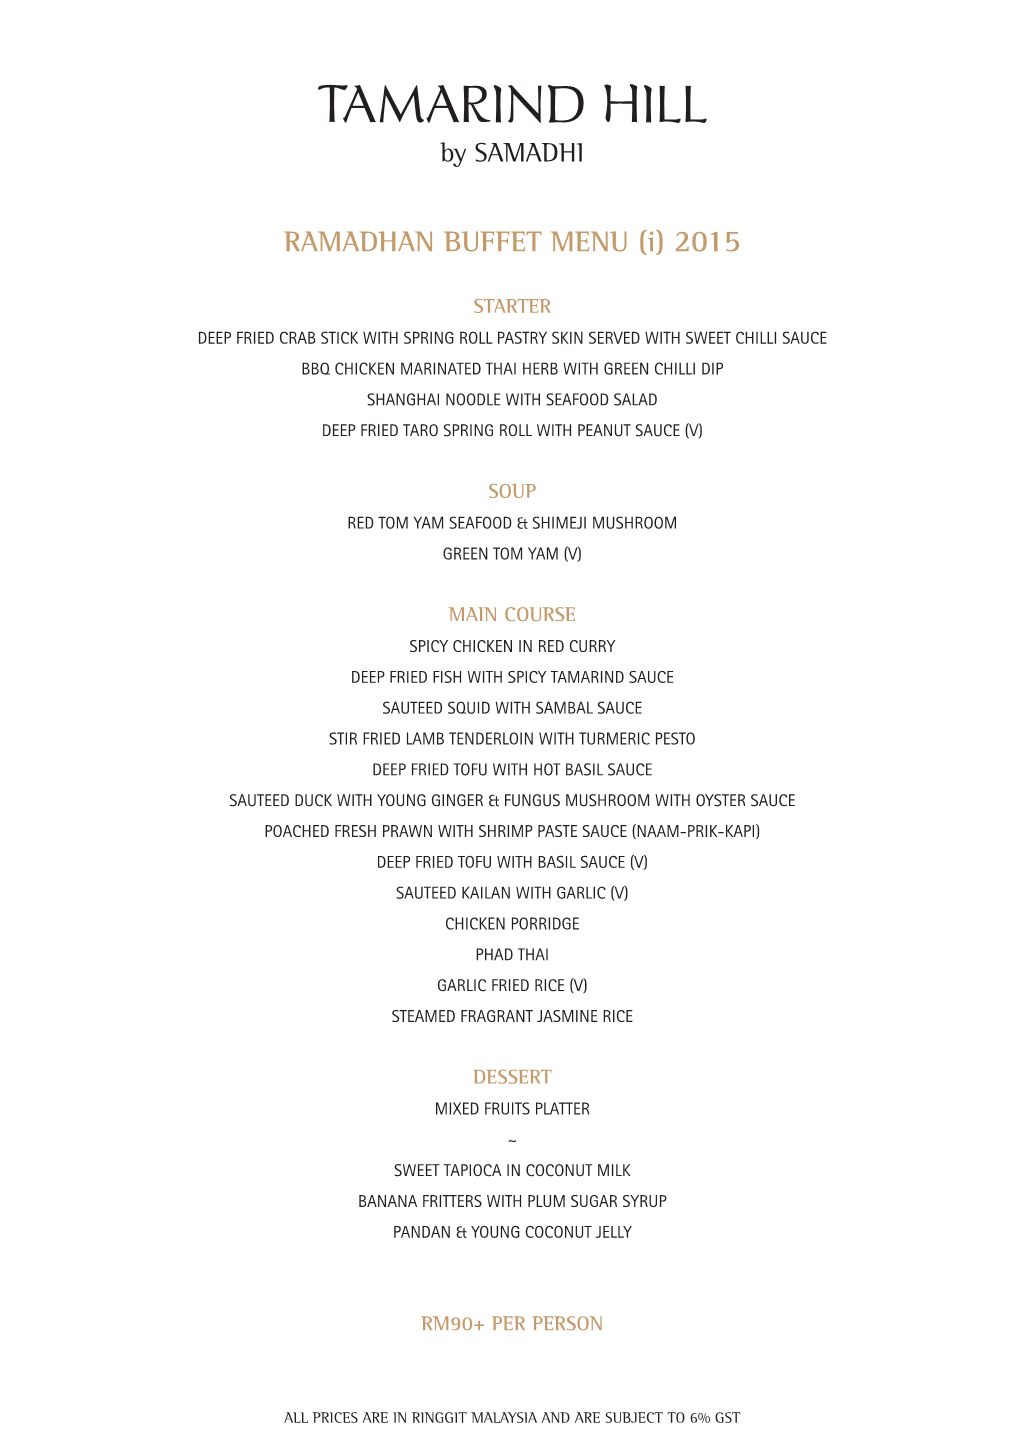 TH Ramadhan Buffet 2015